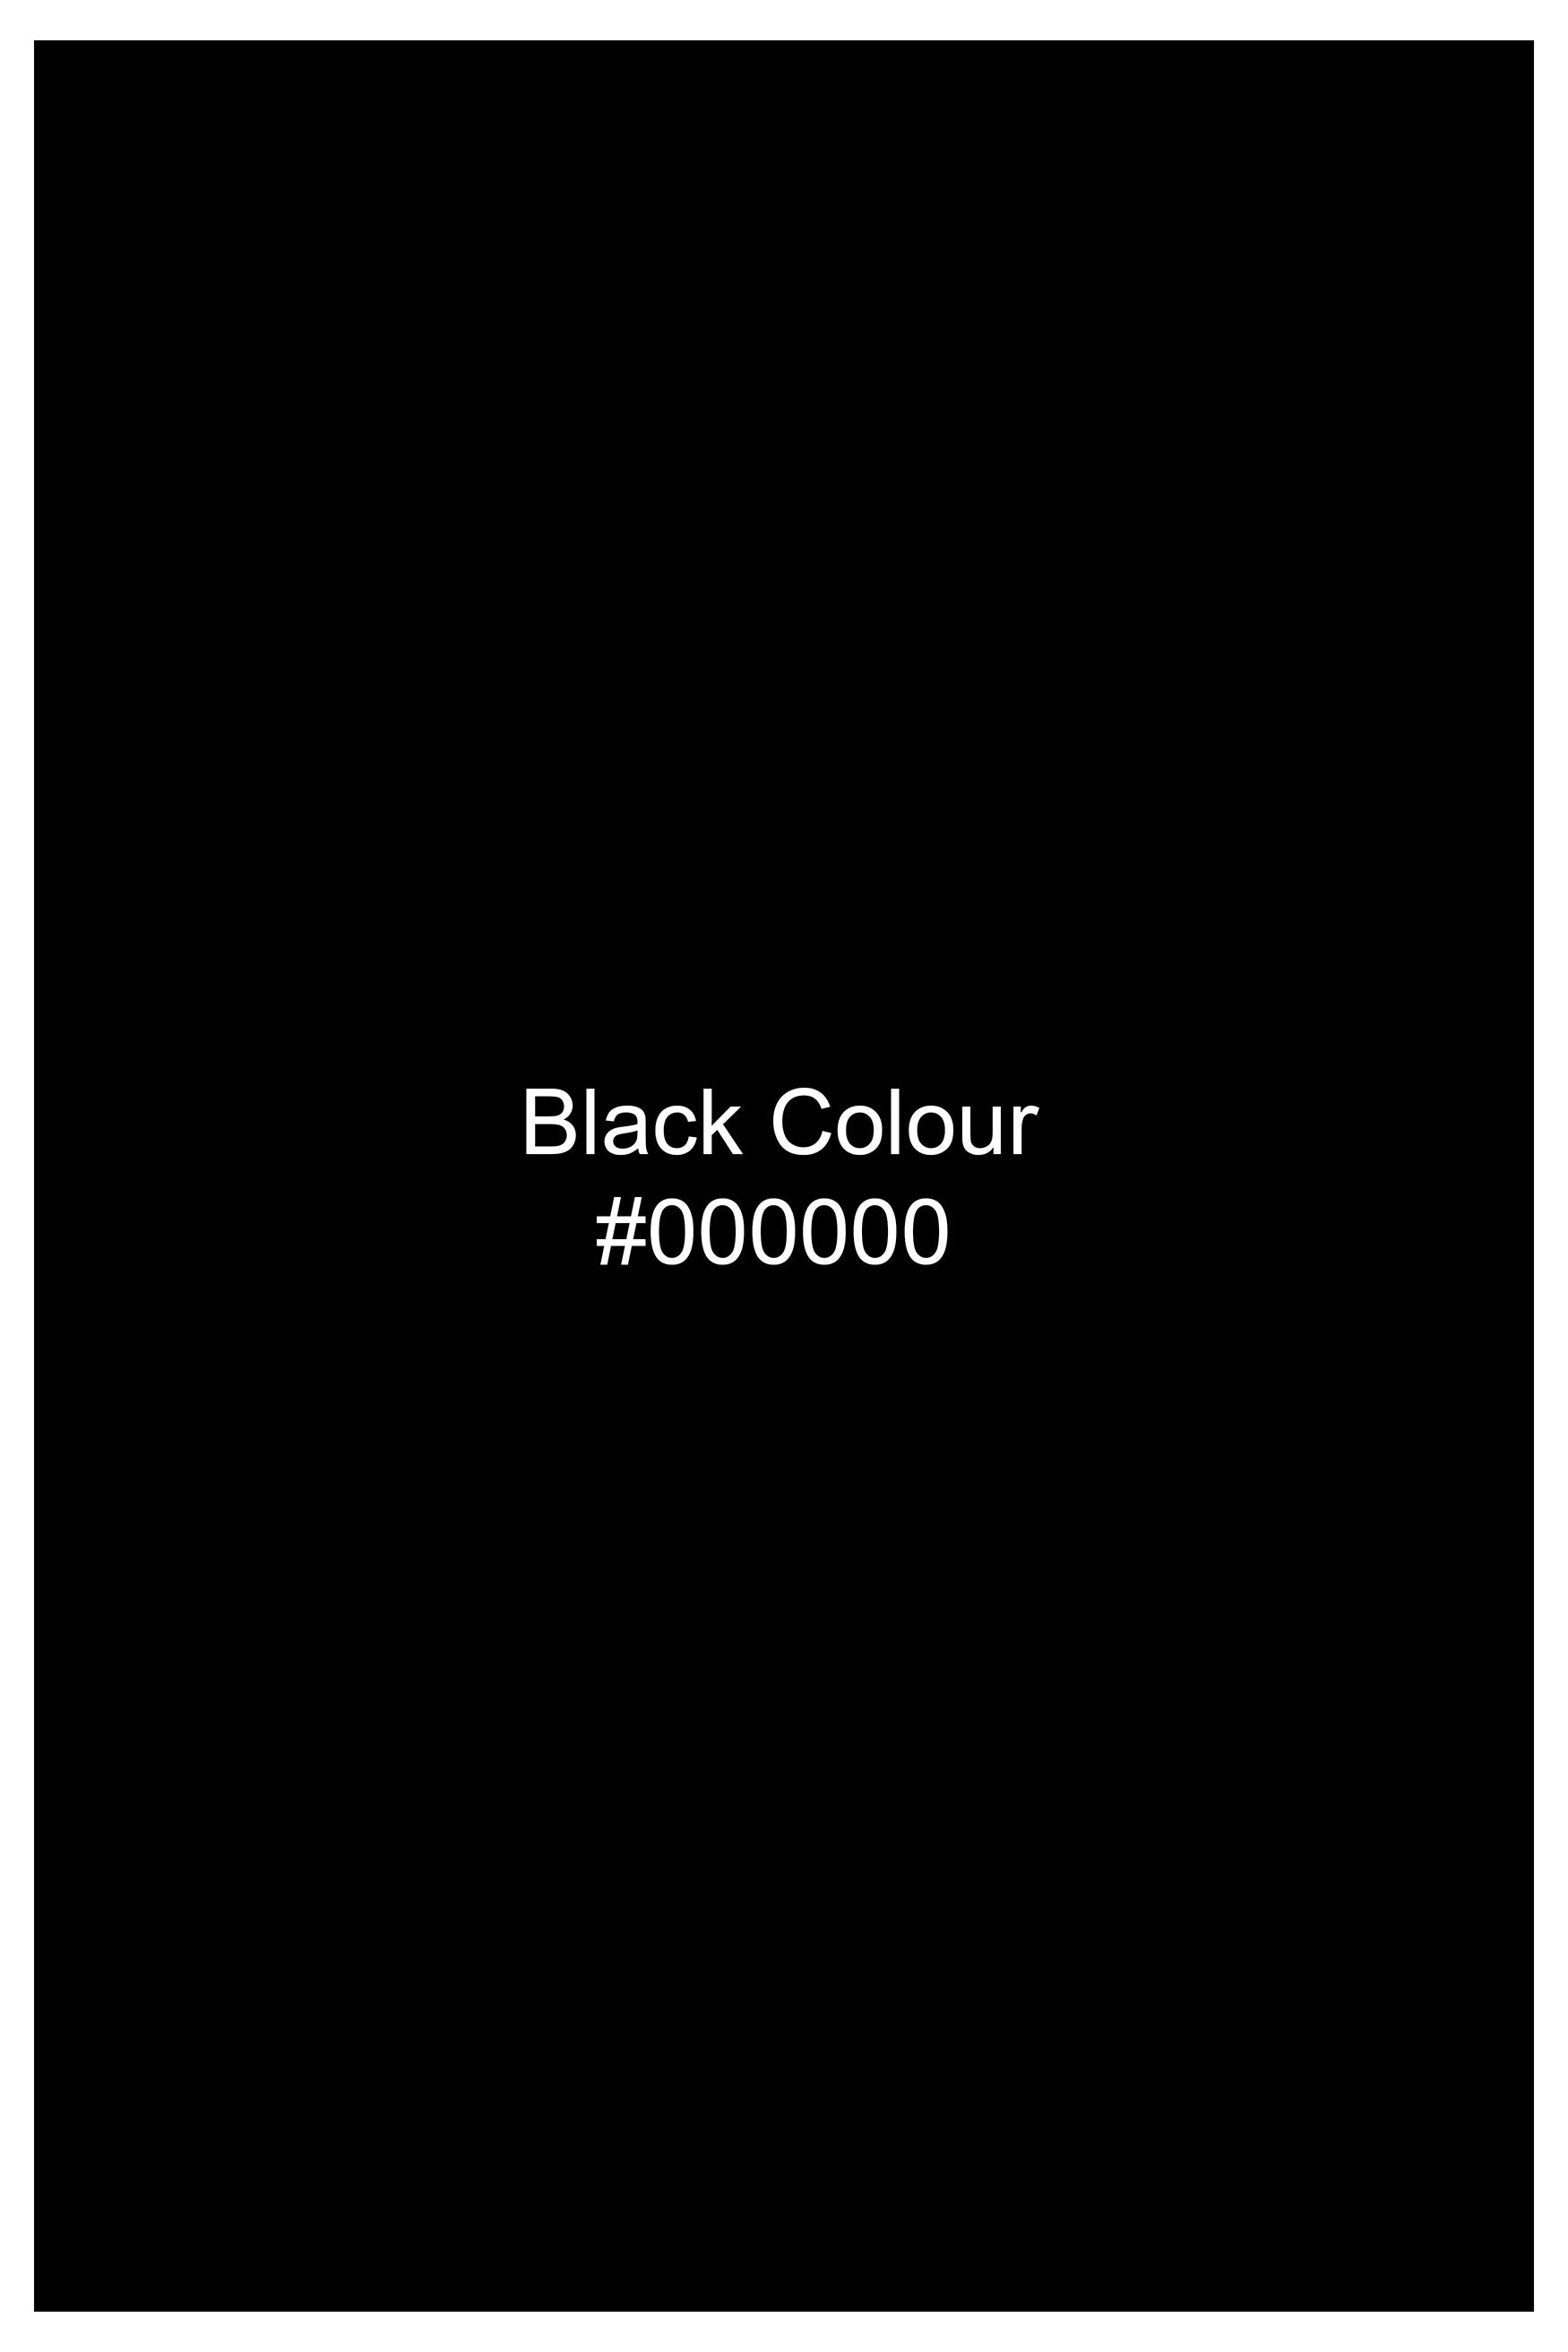 Jade Black with Multicolor Kutch Work Patches Subtle Sheen Super Soft Premium Cotton Designer Shirt 11937-BLK-E298-38, 11937-BLK-E298-H-38, 11937-BLK-E298-39, 11937-BLK-E298-H-39, 11937-BLK-E298-40, 11937-BLK-E298-H-40, 11937-BLK-E298-42, 11937-BLK-E298-H-42, 11937-BLK-E298-44, 11937-BLK-E298-H-44, 11937-BLK-E298-46, 11937-BLK-E298-H-46, 11937-BLK-E298-48, 11937-BLK-E298-H-48, 11937-BLK-E298-50, 11937-BLK-E298-H-50, 11937-BLK-E298-52, 11937-BLK-E298-H-52